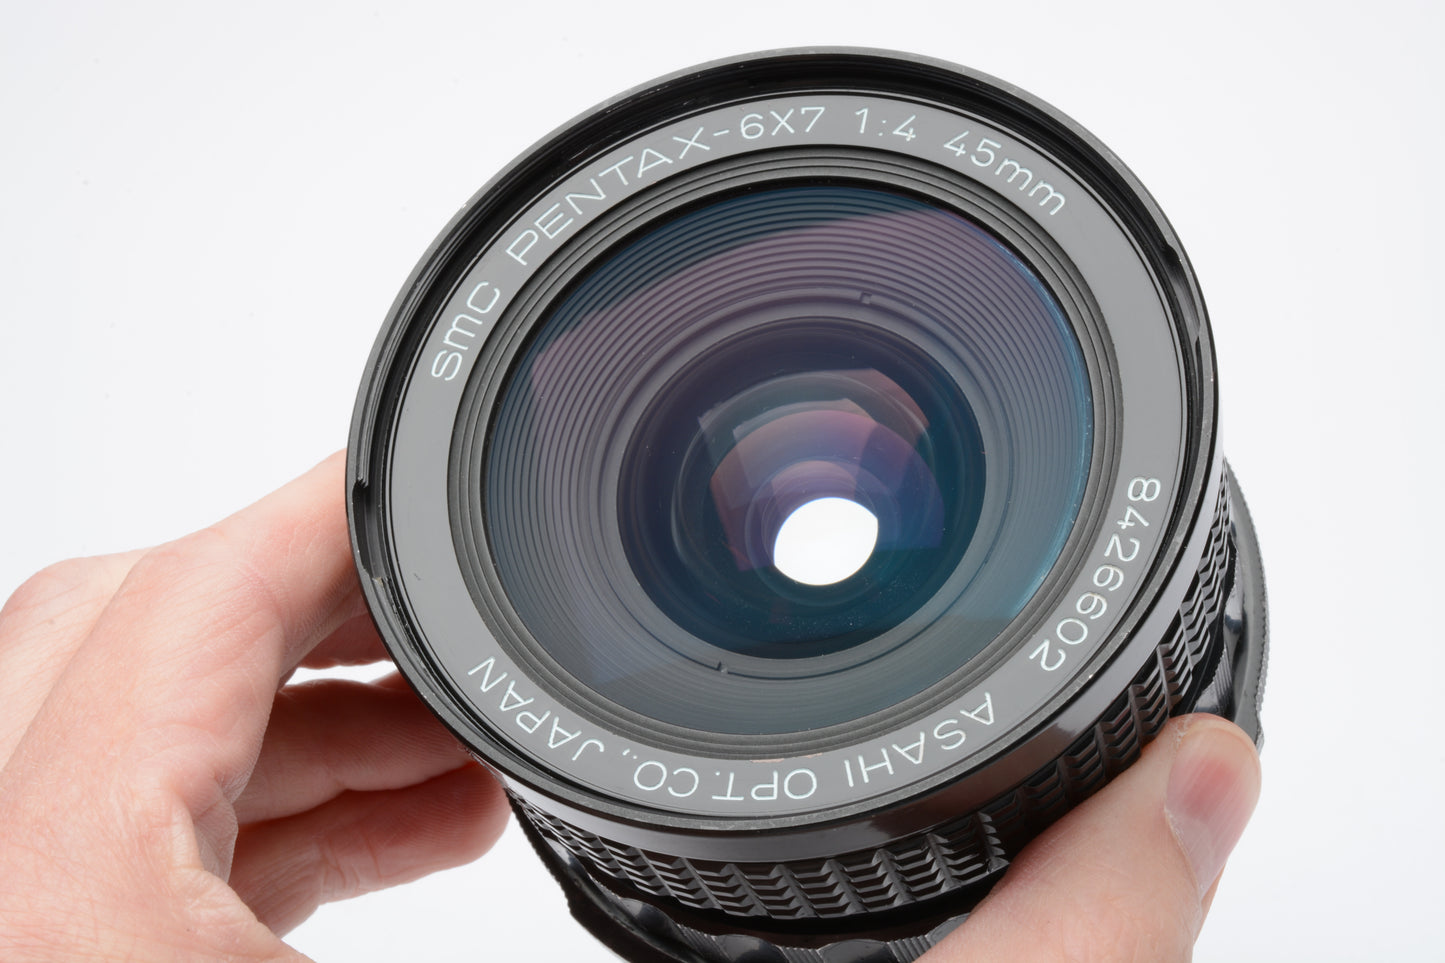 Pentax SMC 45mm f4 lens for Pentax 67, caps, UV, sharp